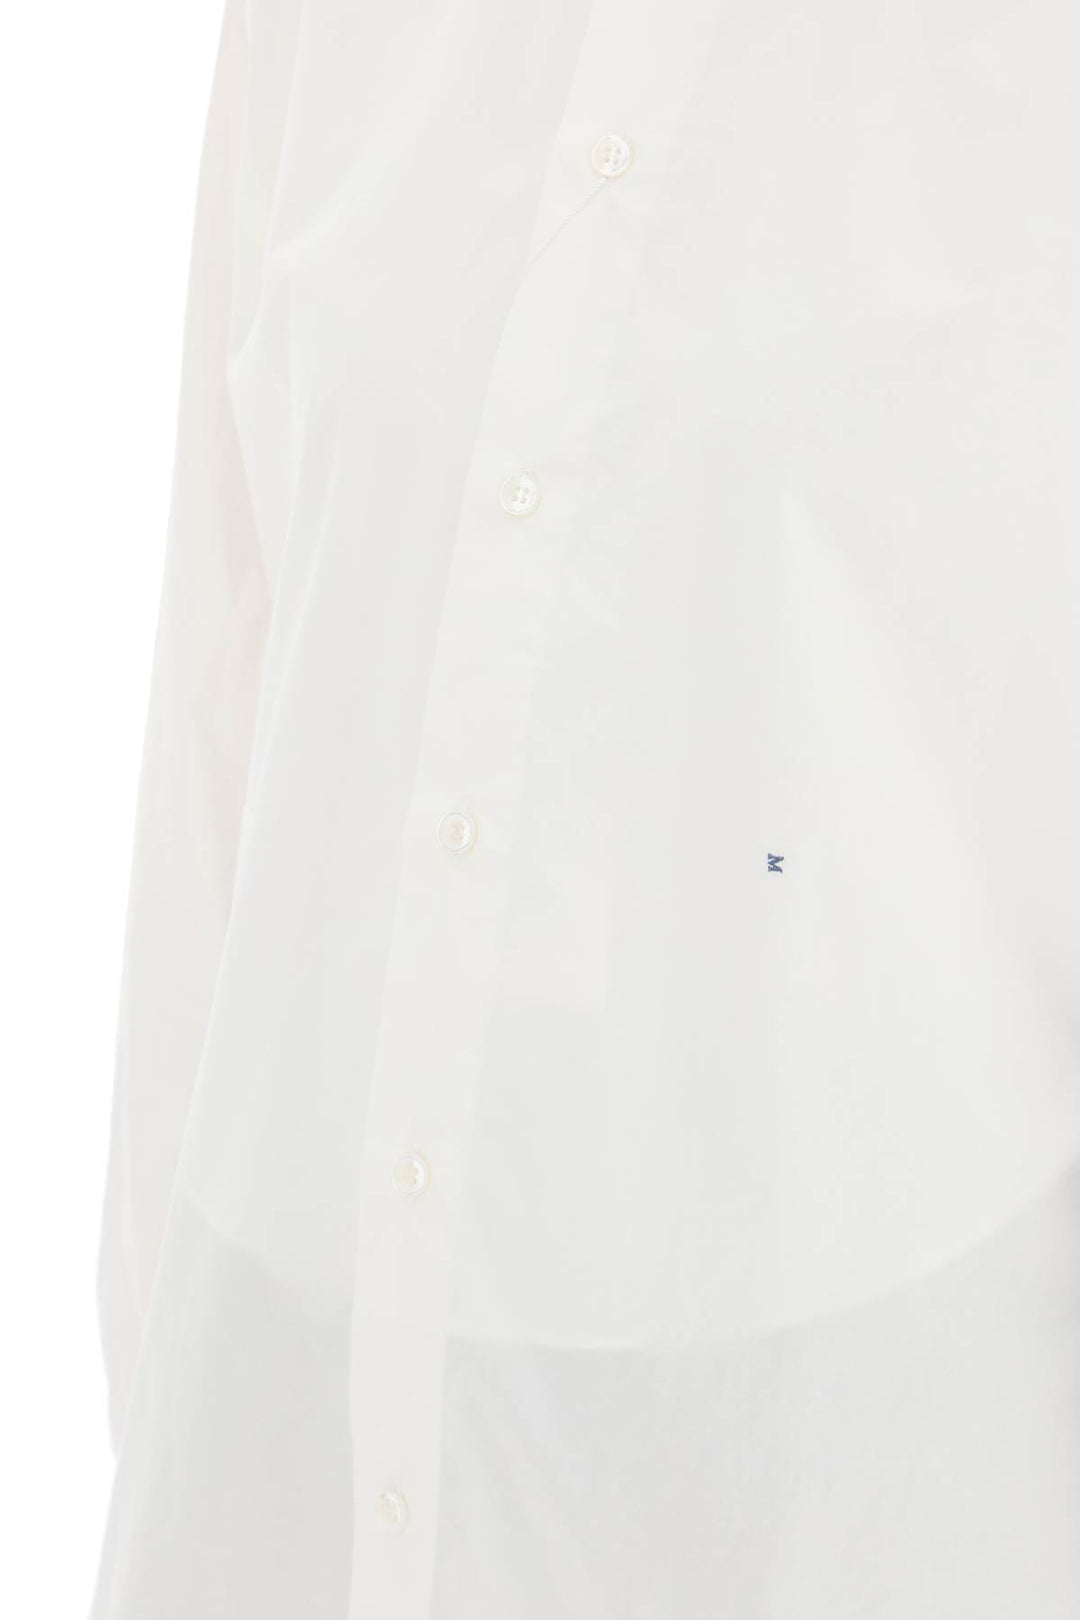 Maison Margiela 'M' Cotton Shirt   Bianco